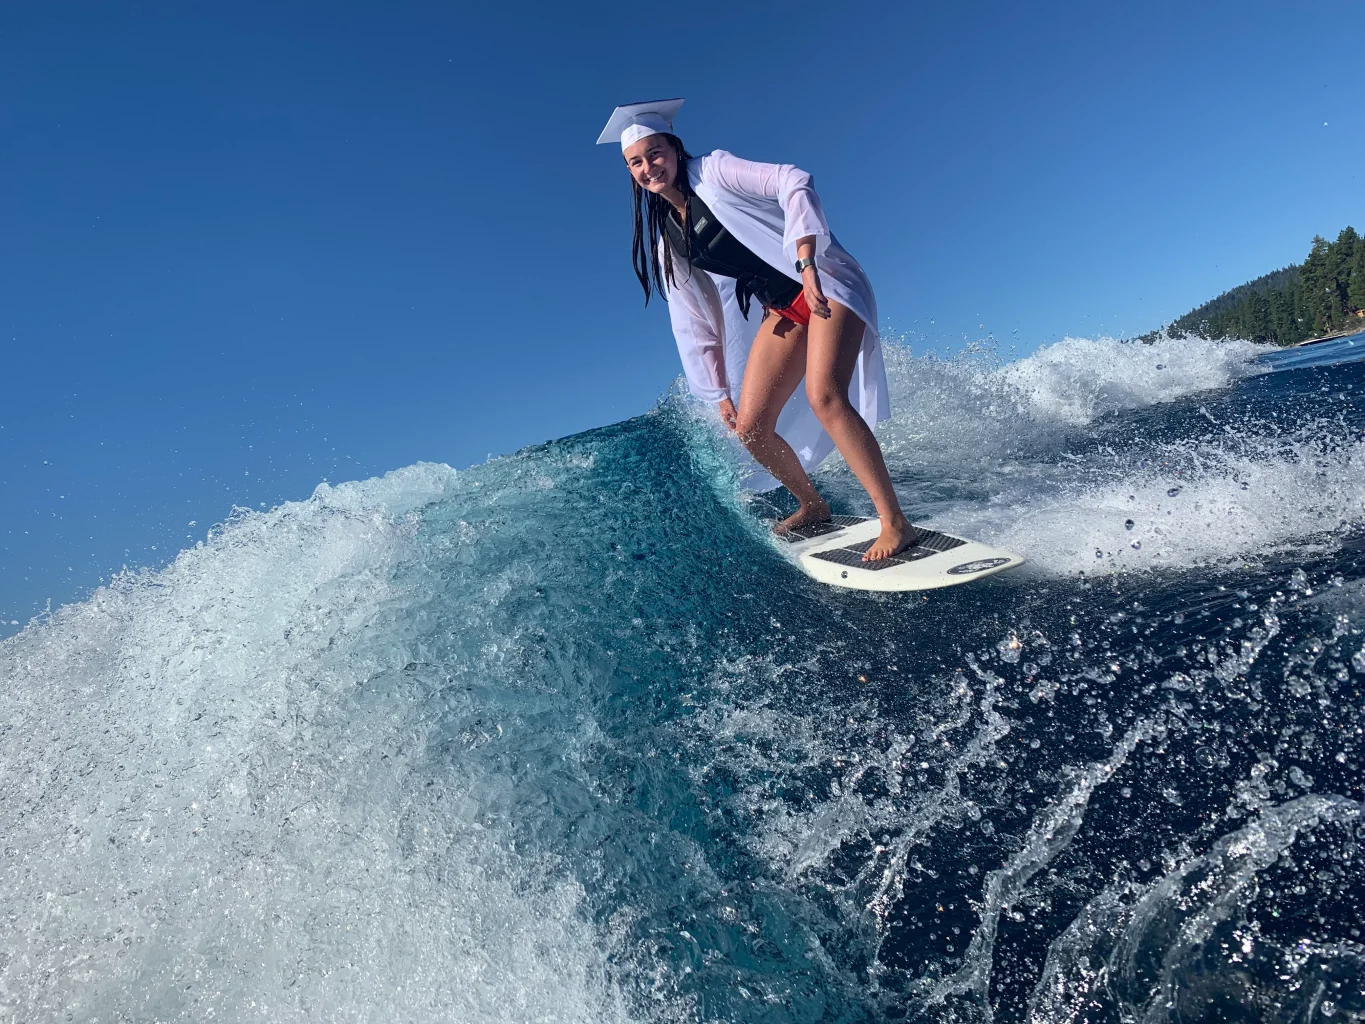 Girl surfing Lake almanor in graduation gear